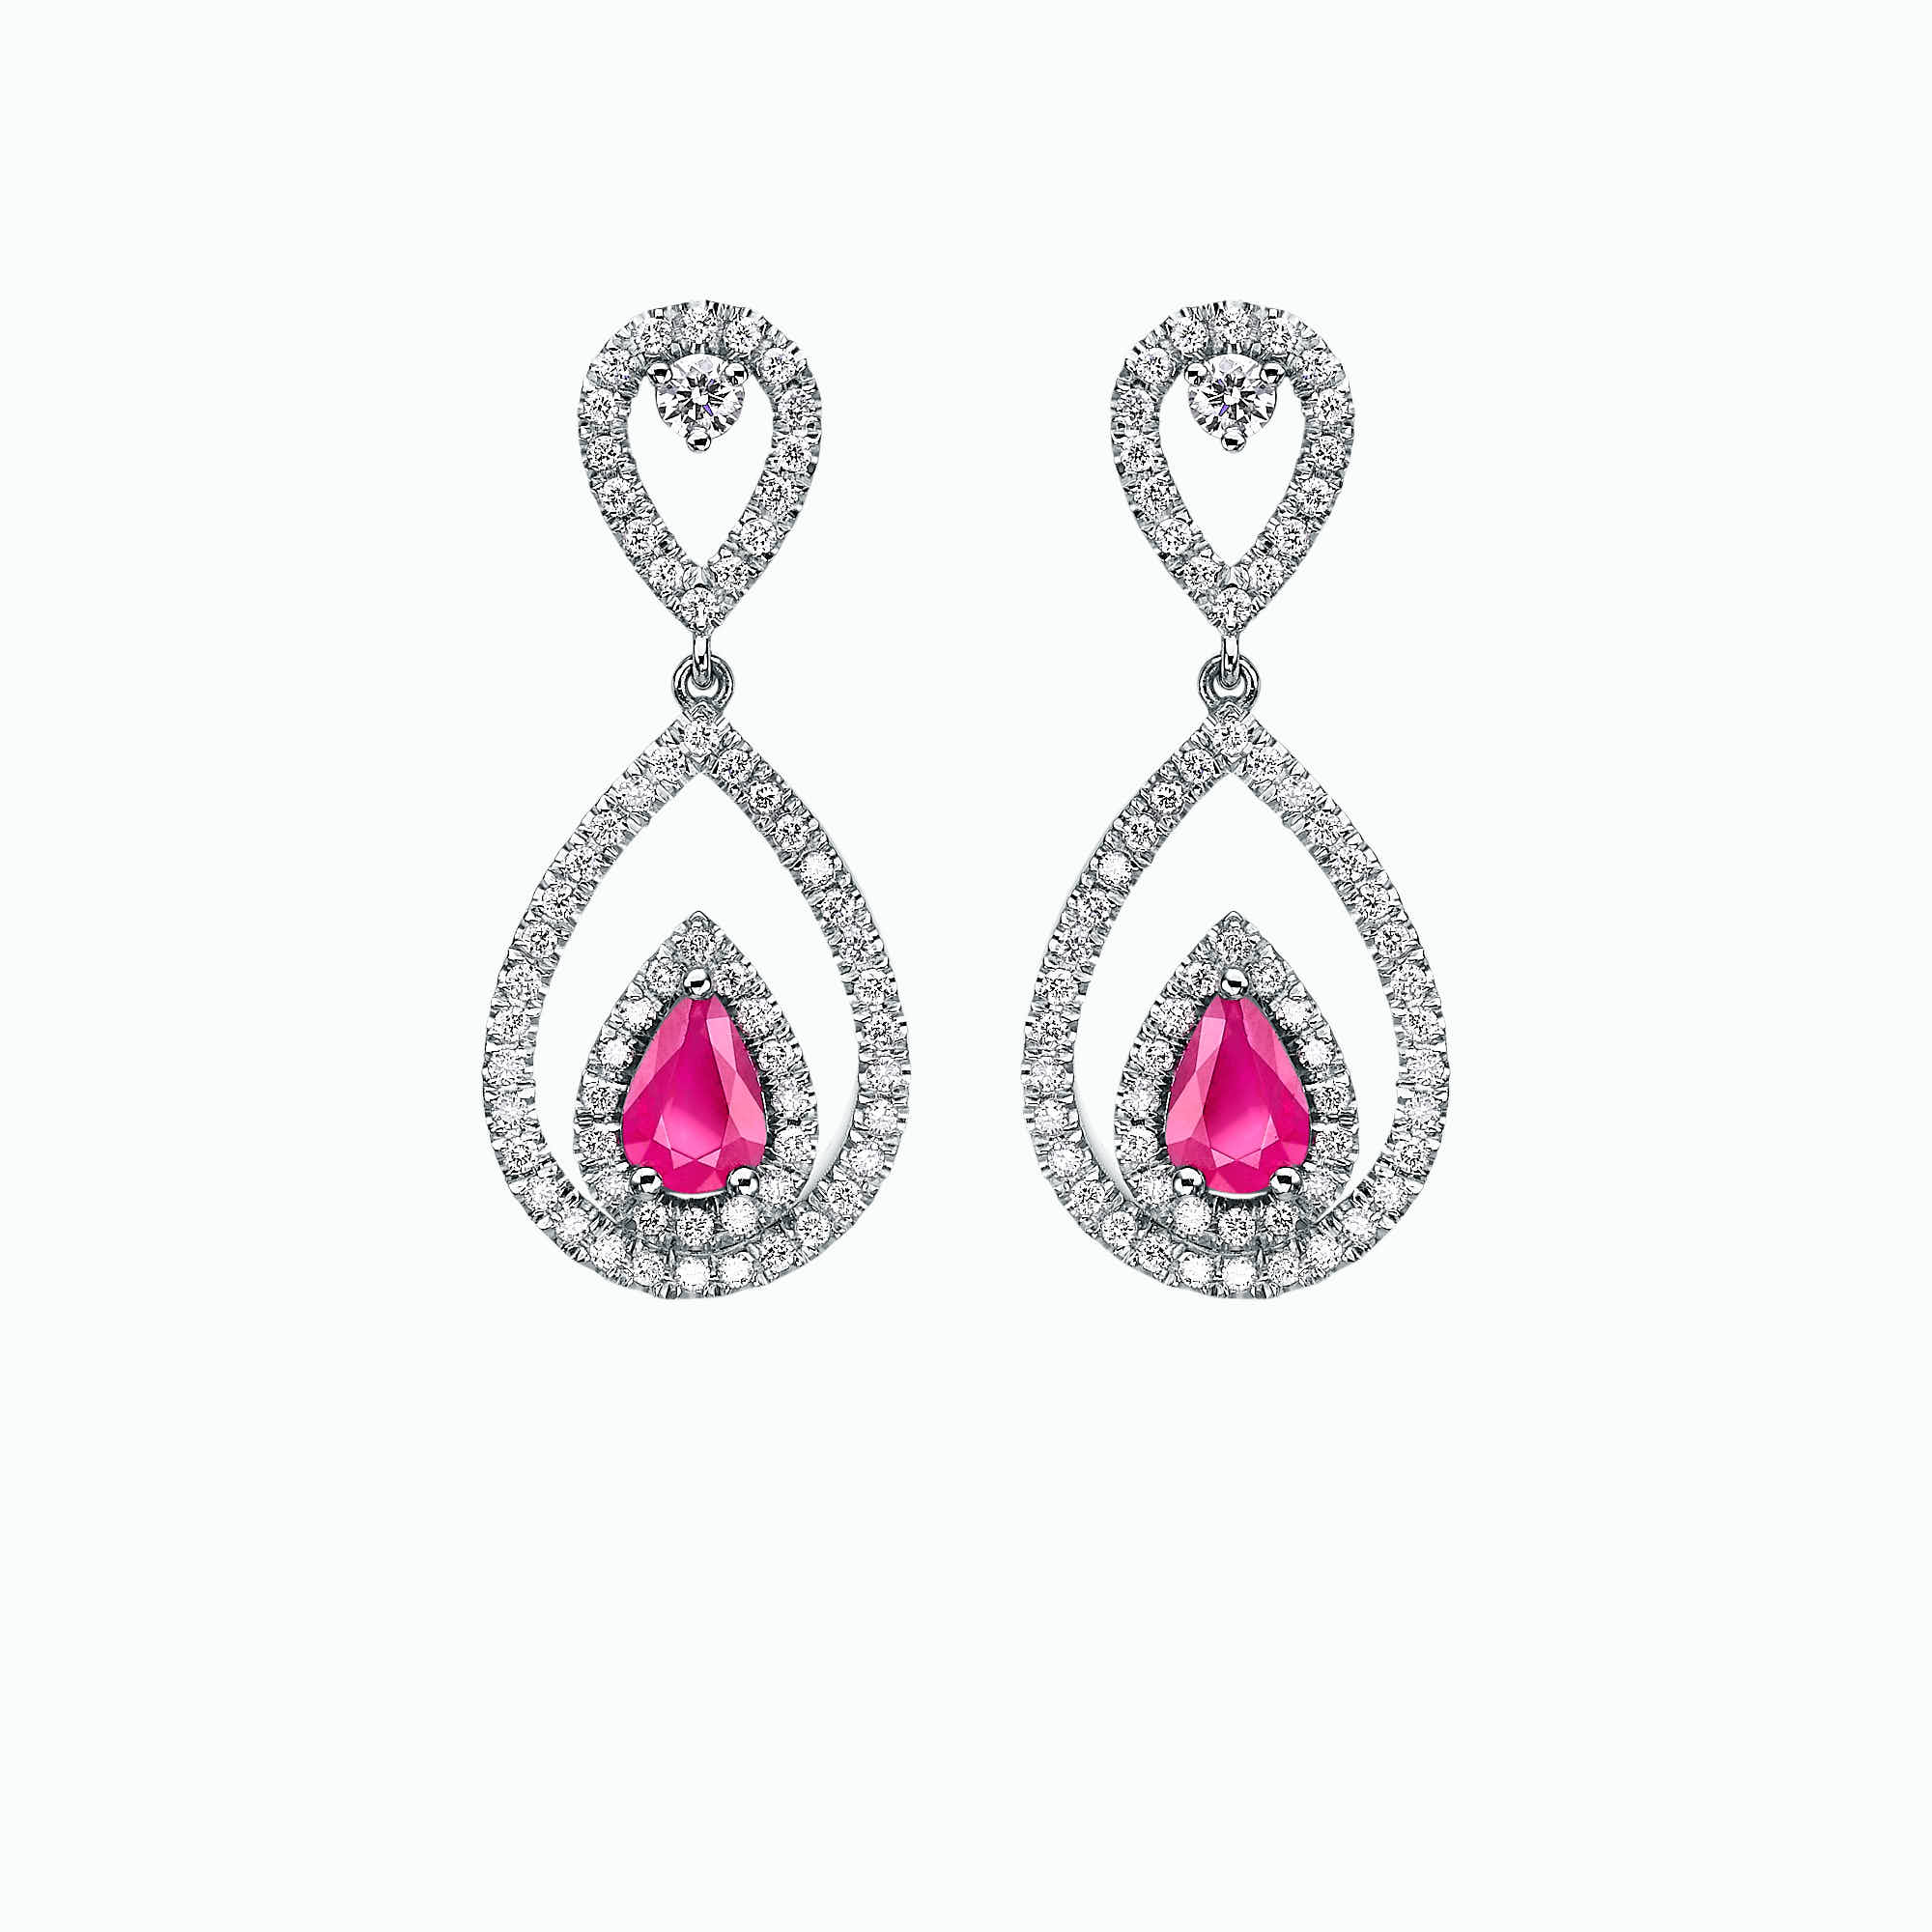 Diamond and Gem Stone Earrings - caprice